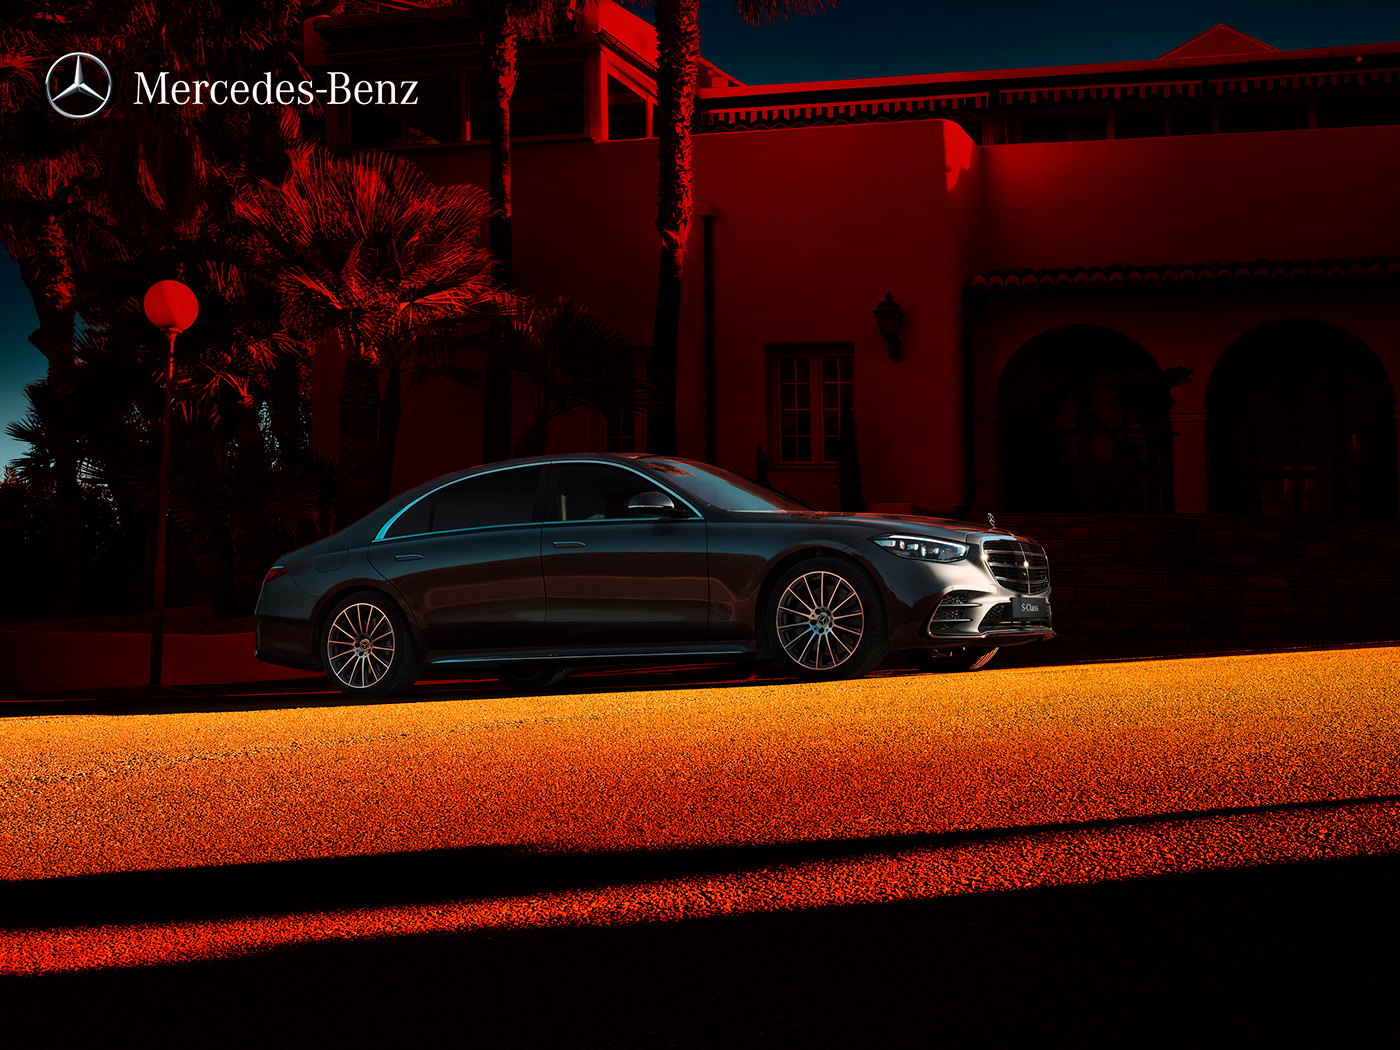 mercedes-benz S-Class colorful car artwork Photography  photographer car photography Car Photographer artwork Mercedes-Benz S-class